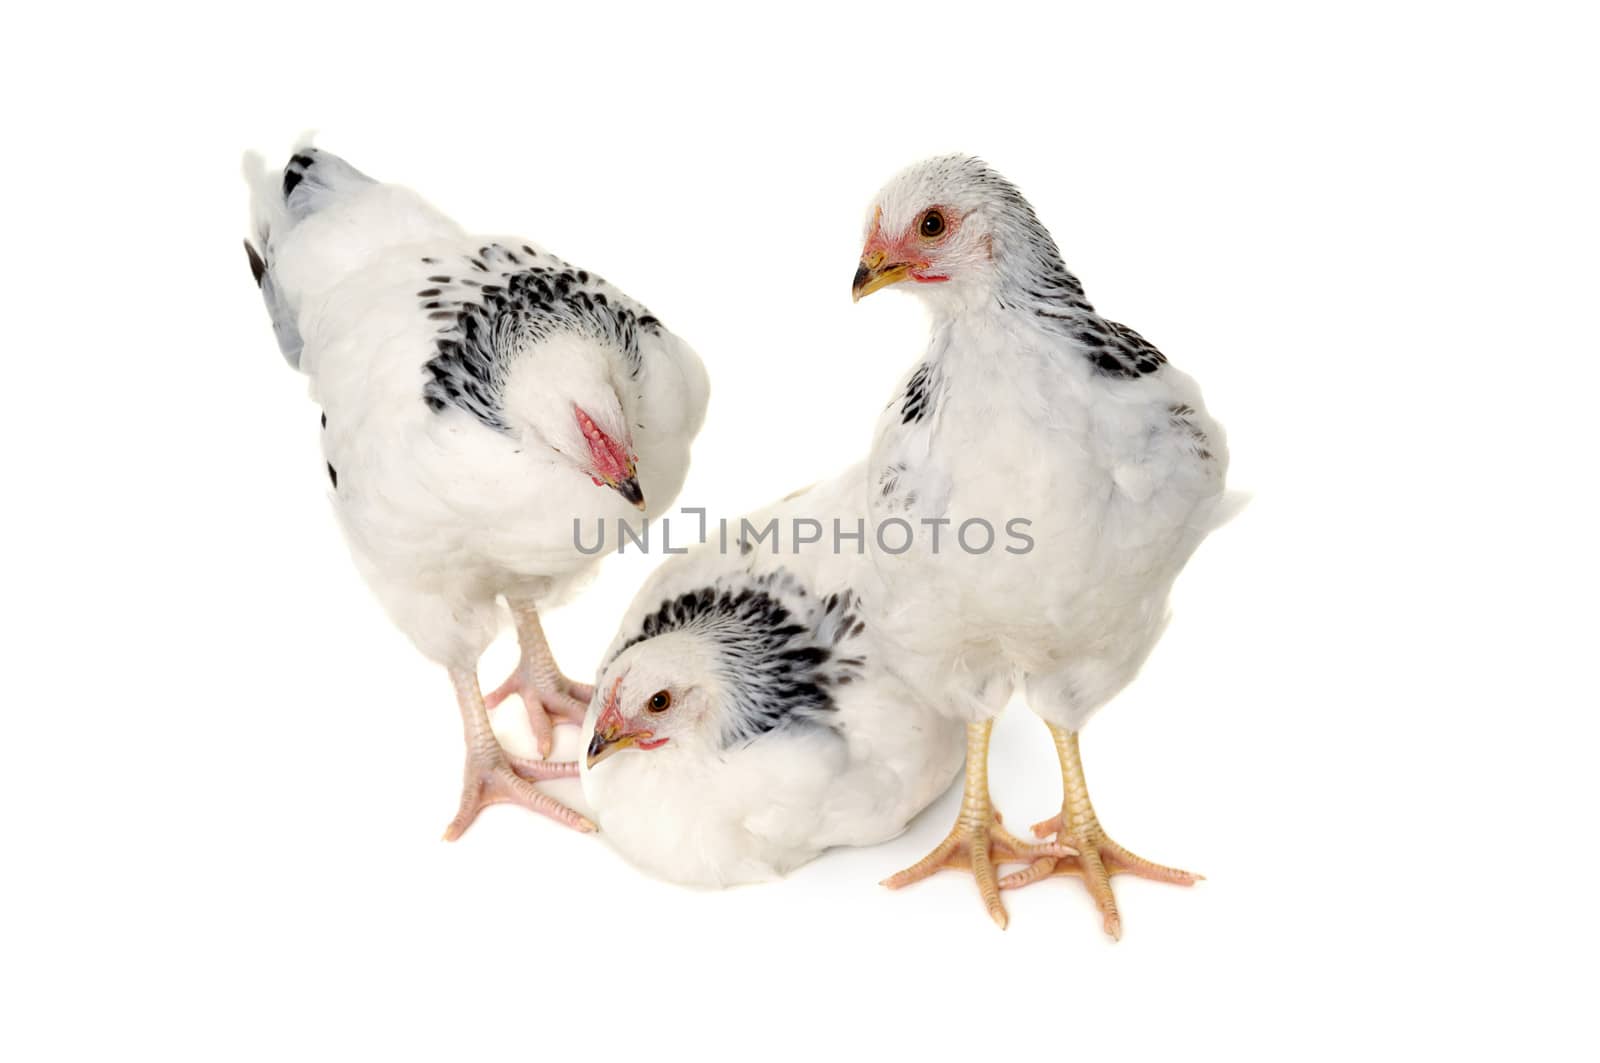 Chickens on white background by cfoto